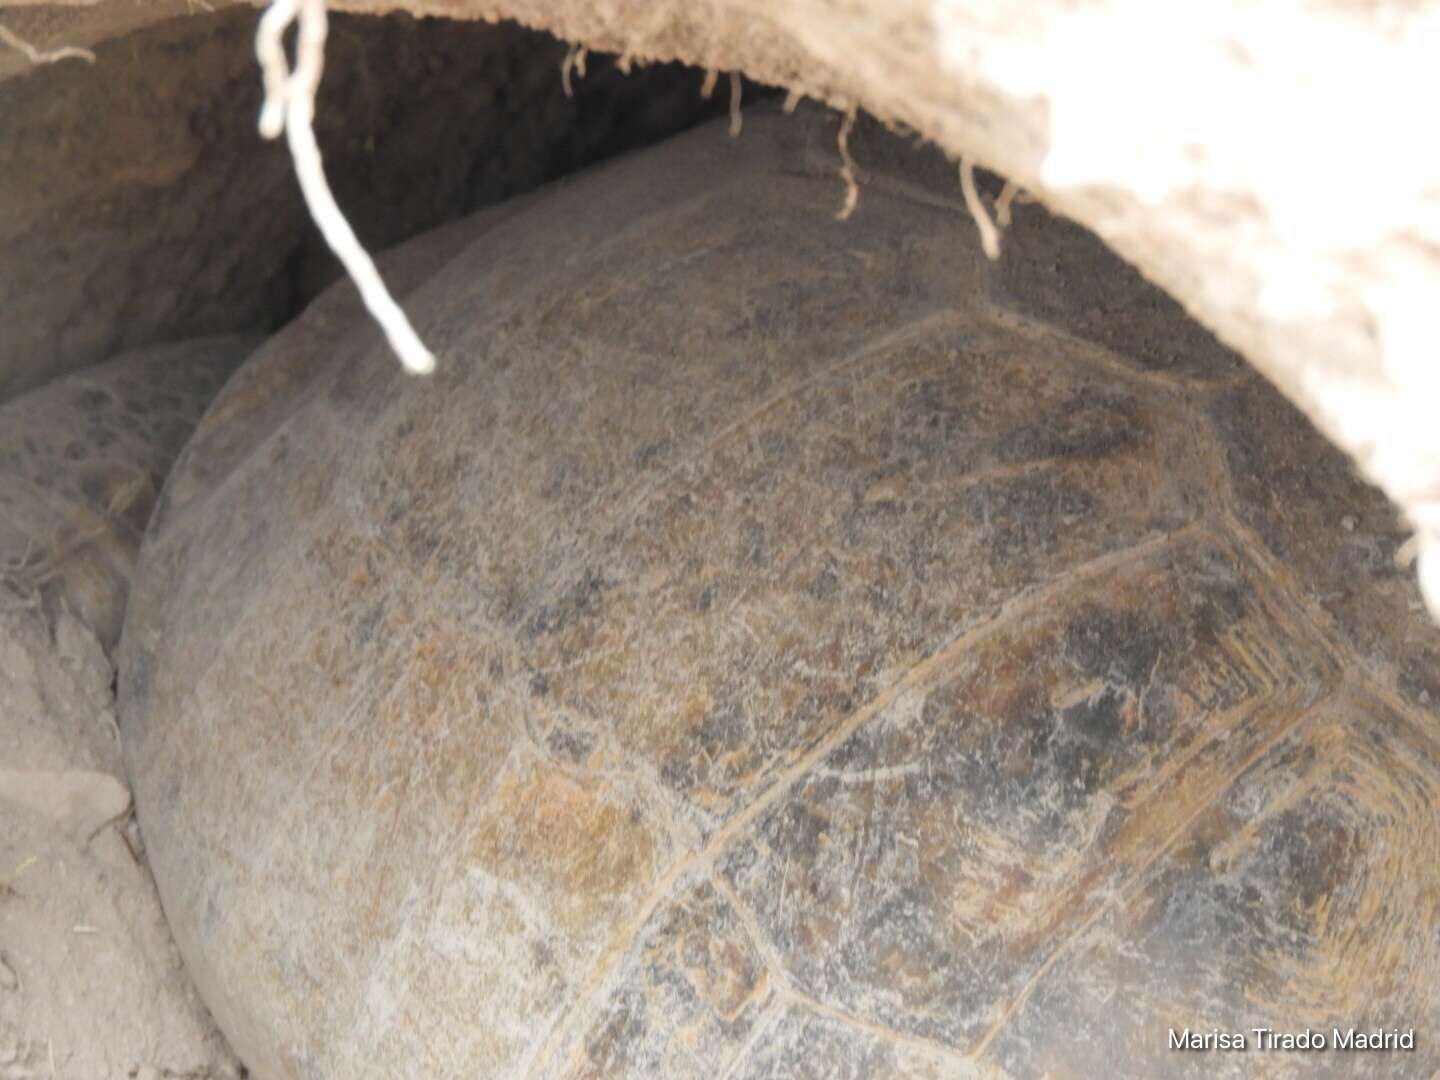 Image of Bolson Tortoise